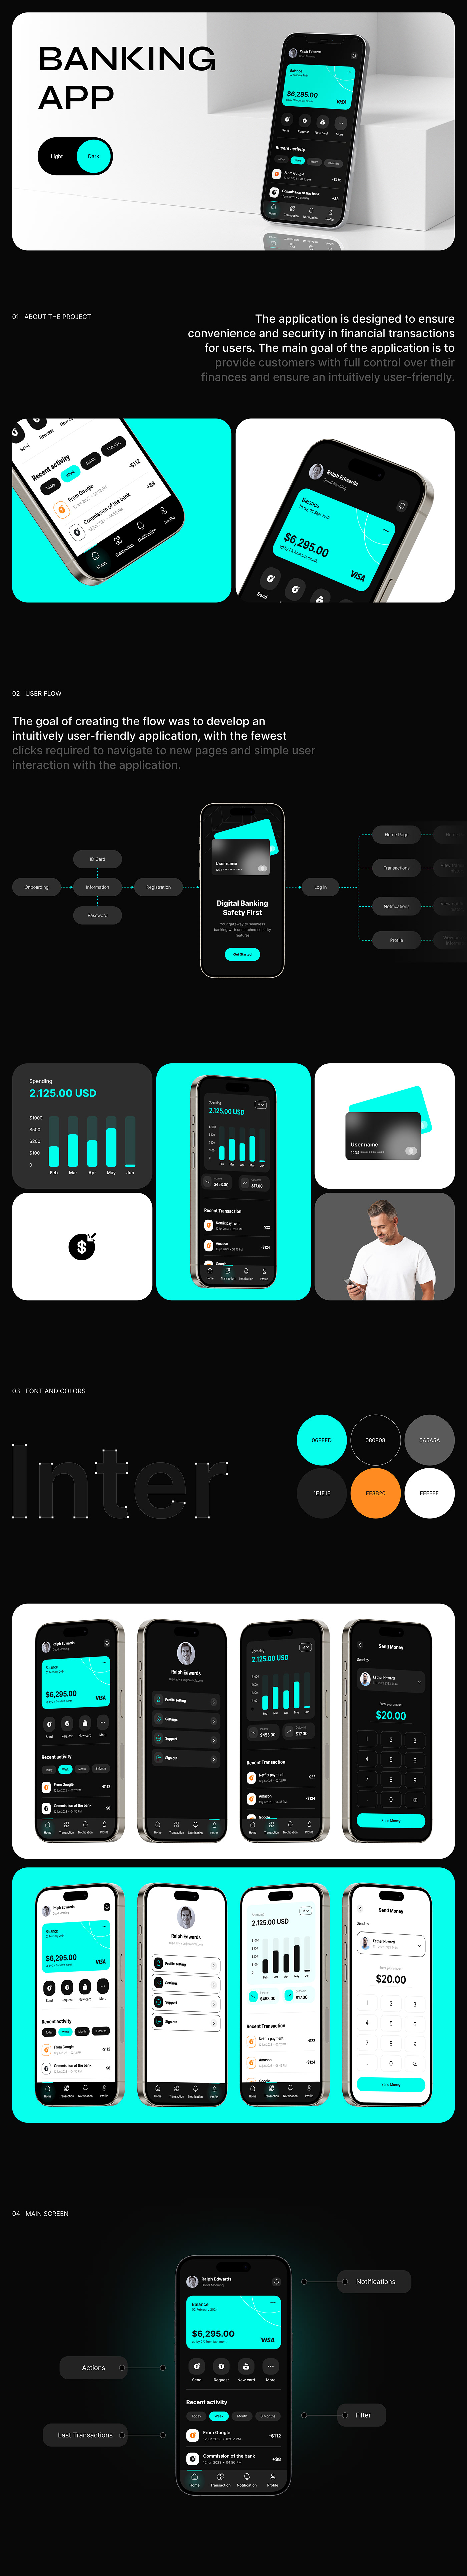 mobile design Mobile app mobile app design UX UI DESign ui design inspiration trendy design banking app finance app product design 